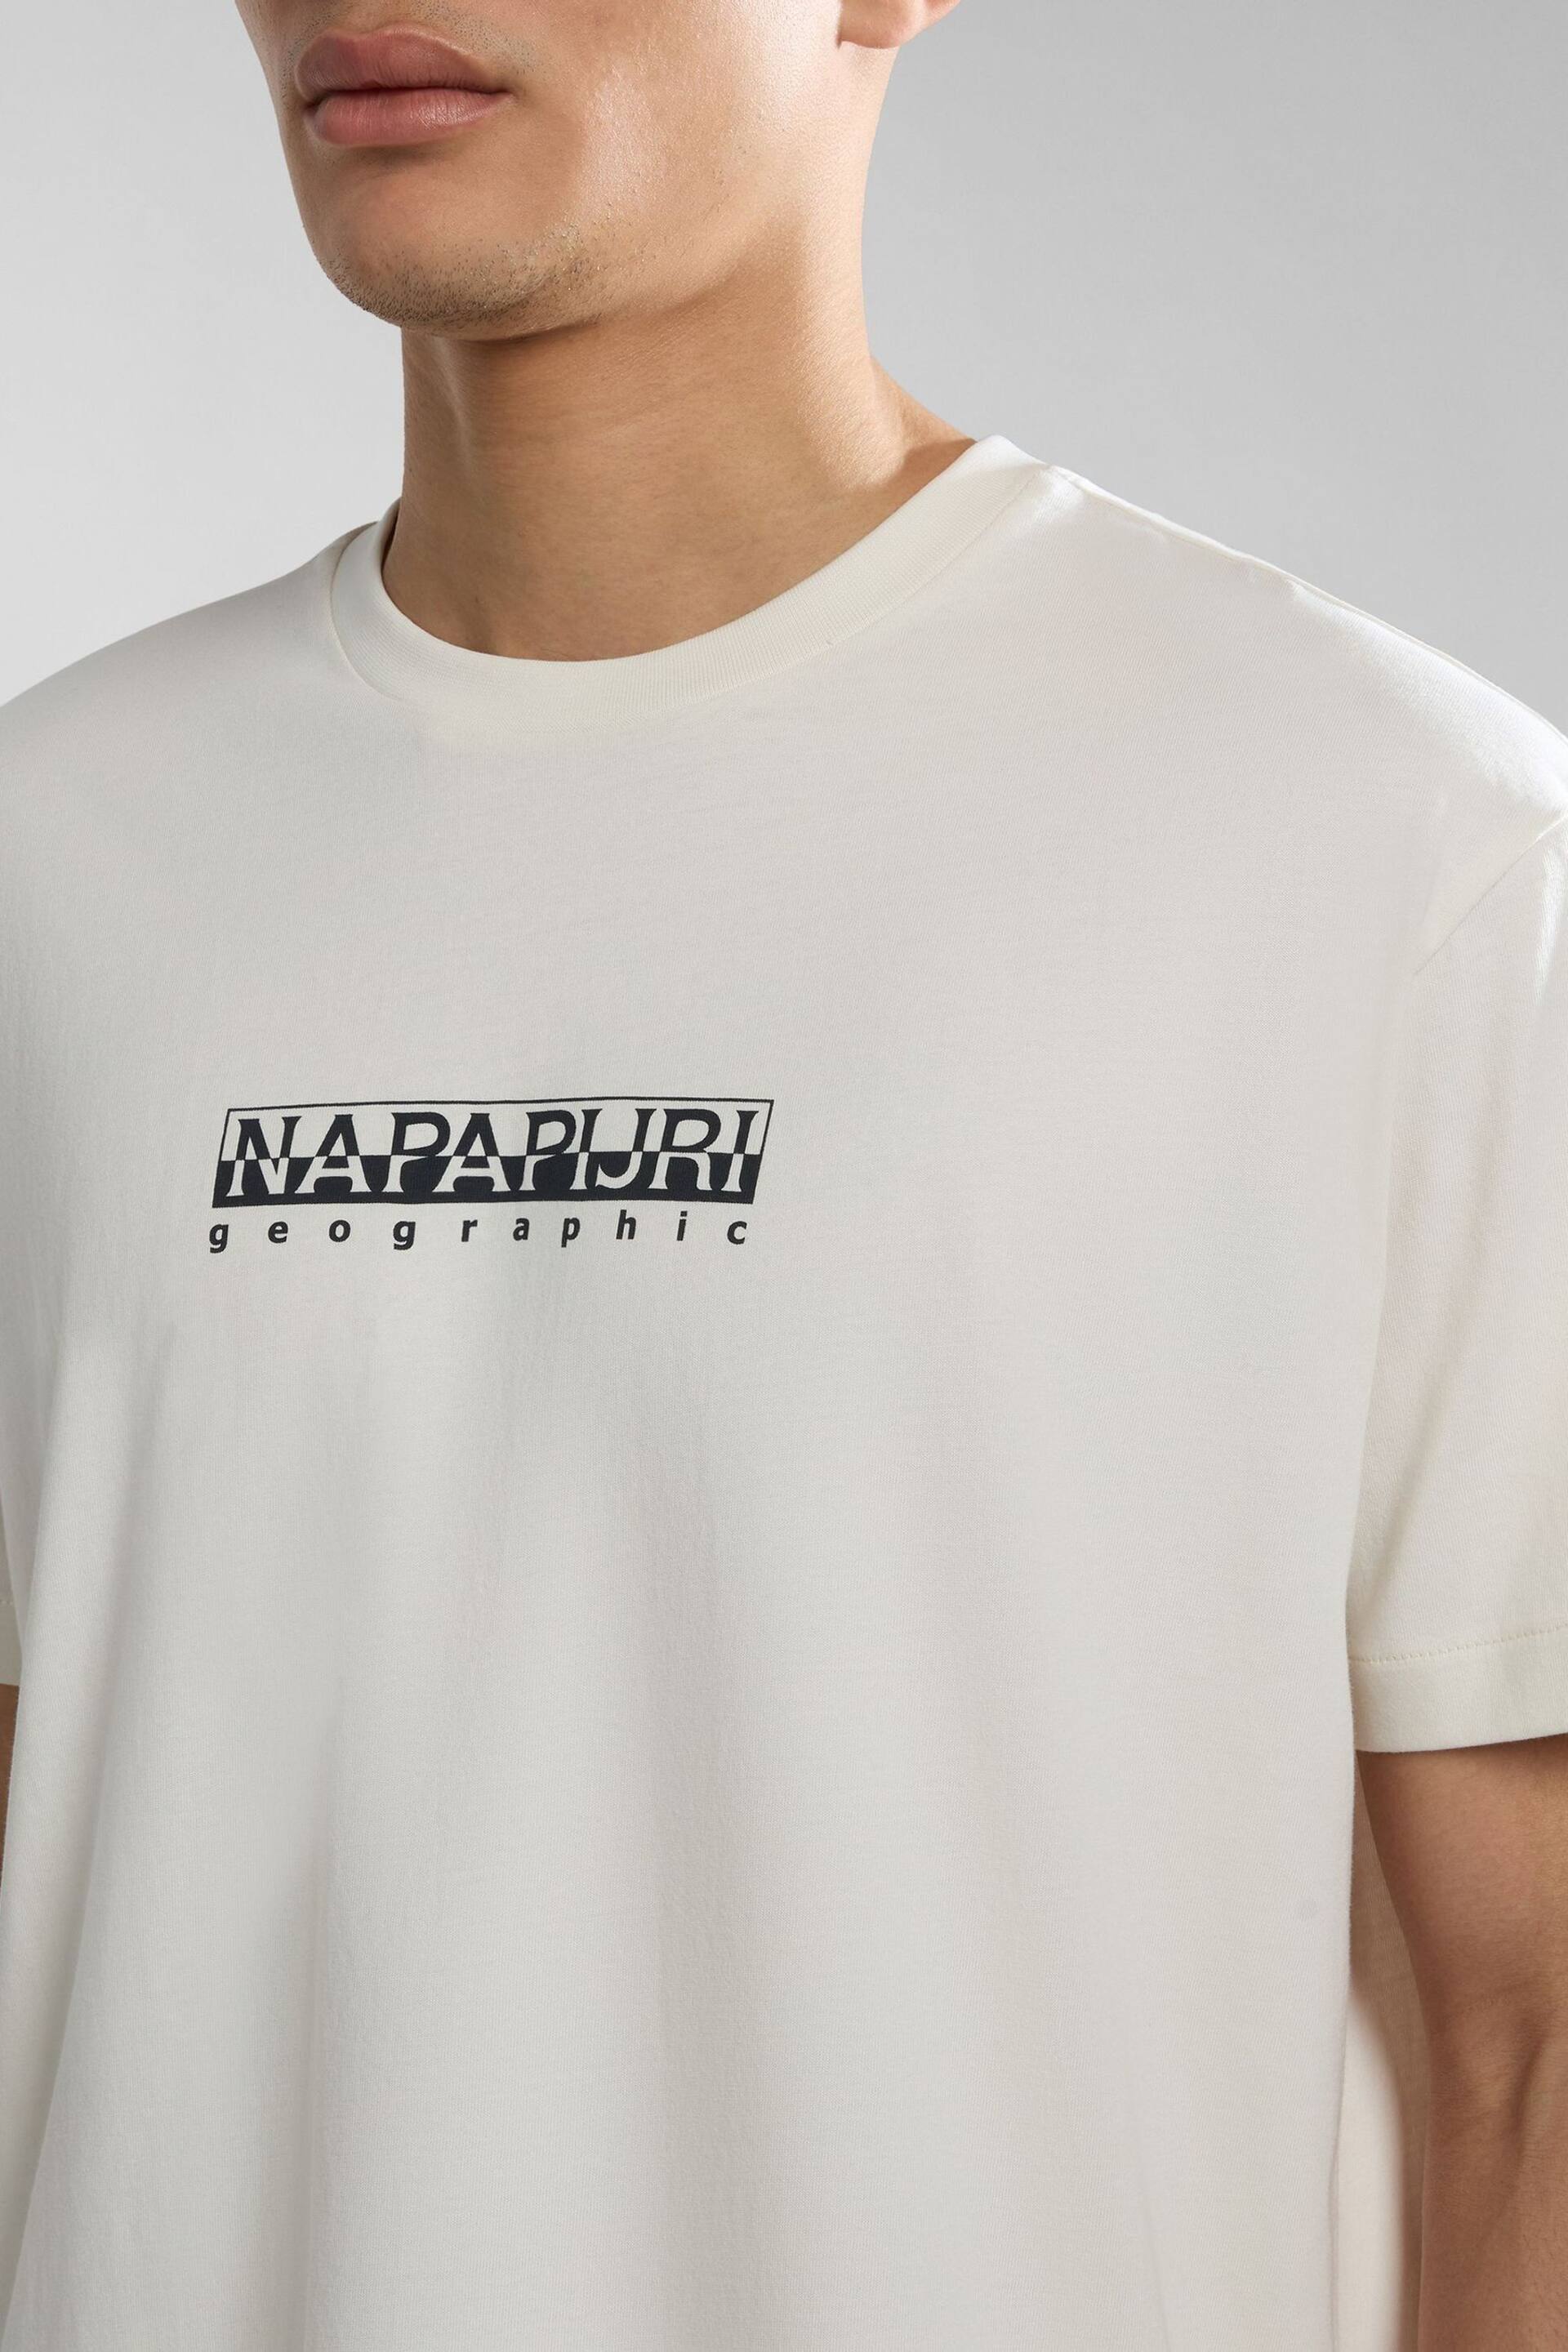 Napapijri Box Logo White Short Sleeve T-Shirt - Image 4 of 6